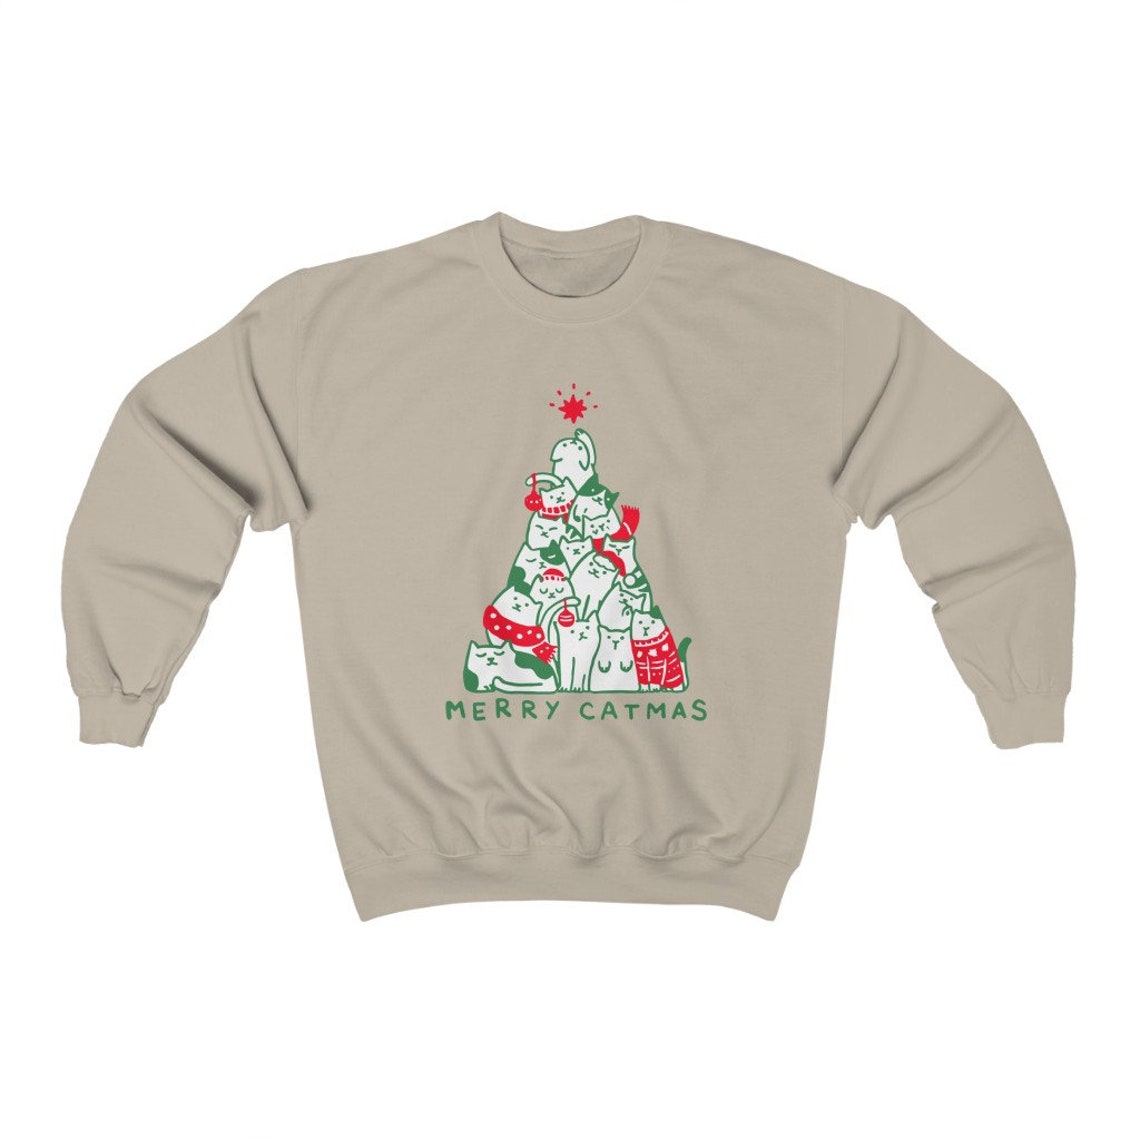 Merry Catmas Unisex Sweatshirt. Christmas Sweatshirt. Holiday | Etsy